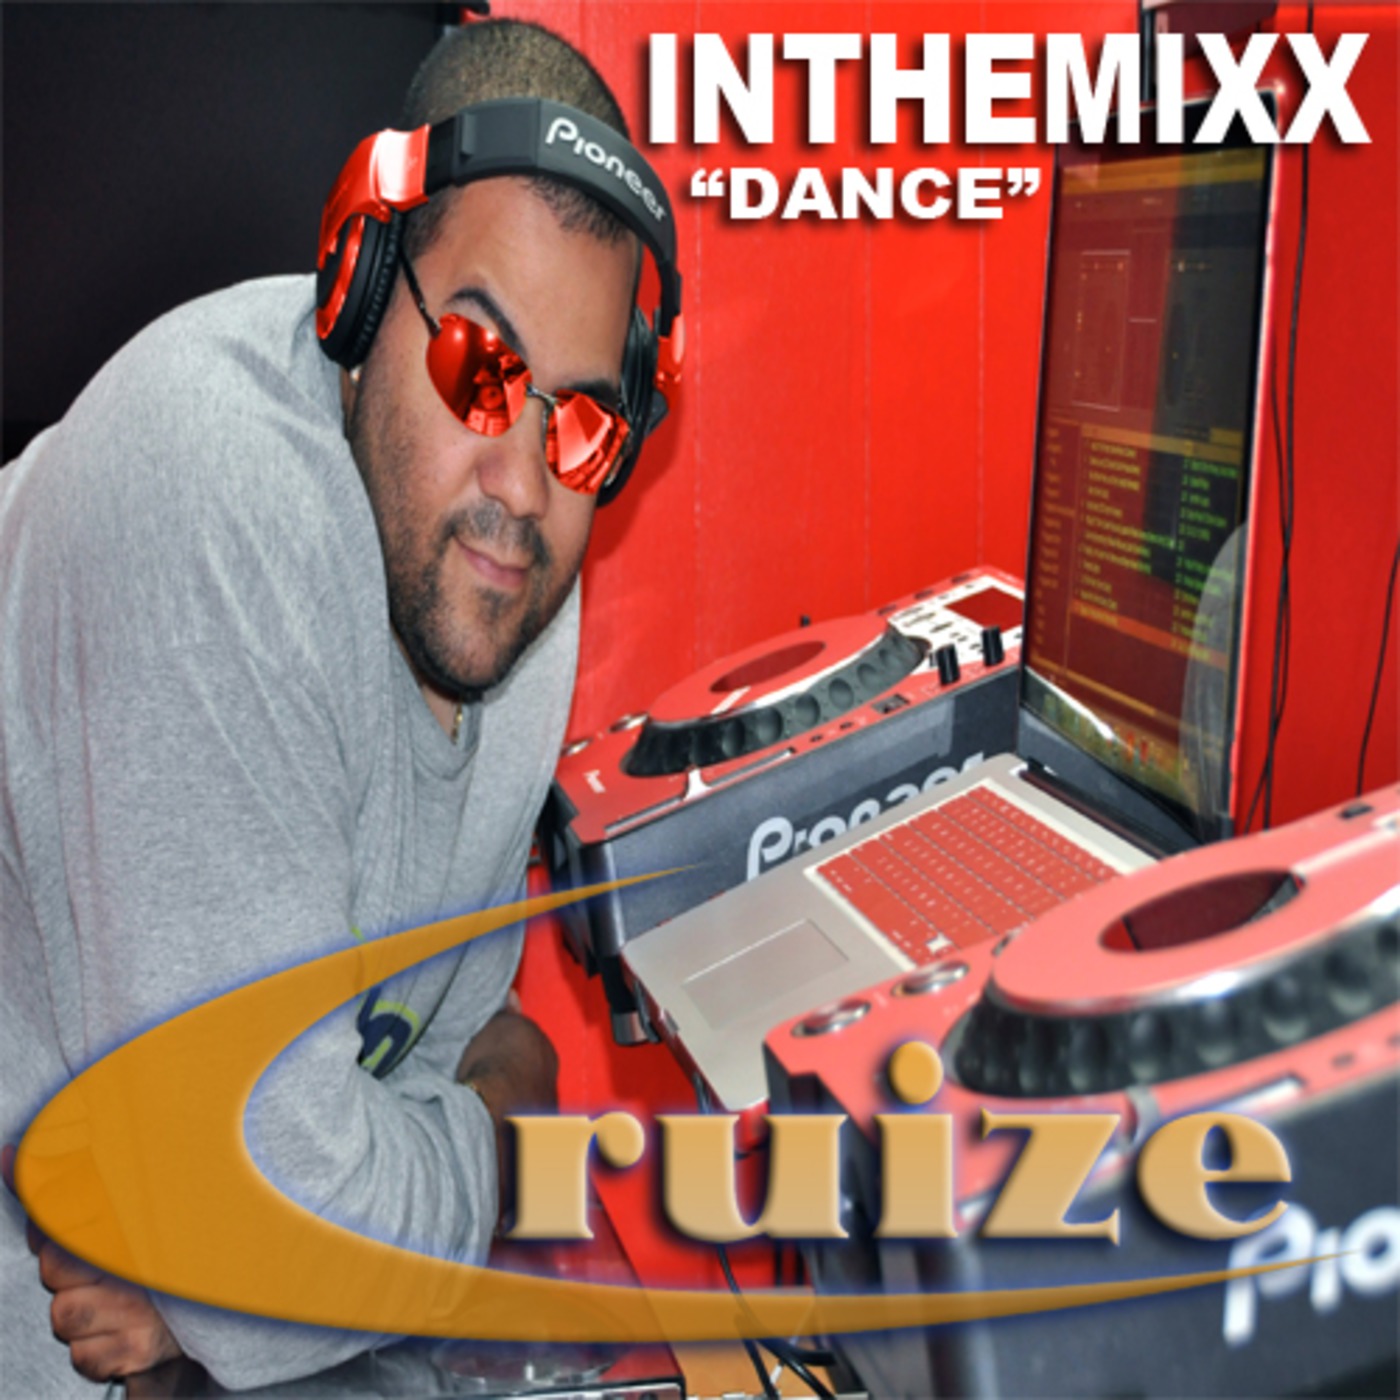 Inthemixx ”Dance”